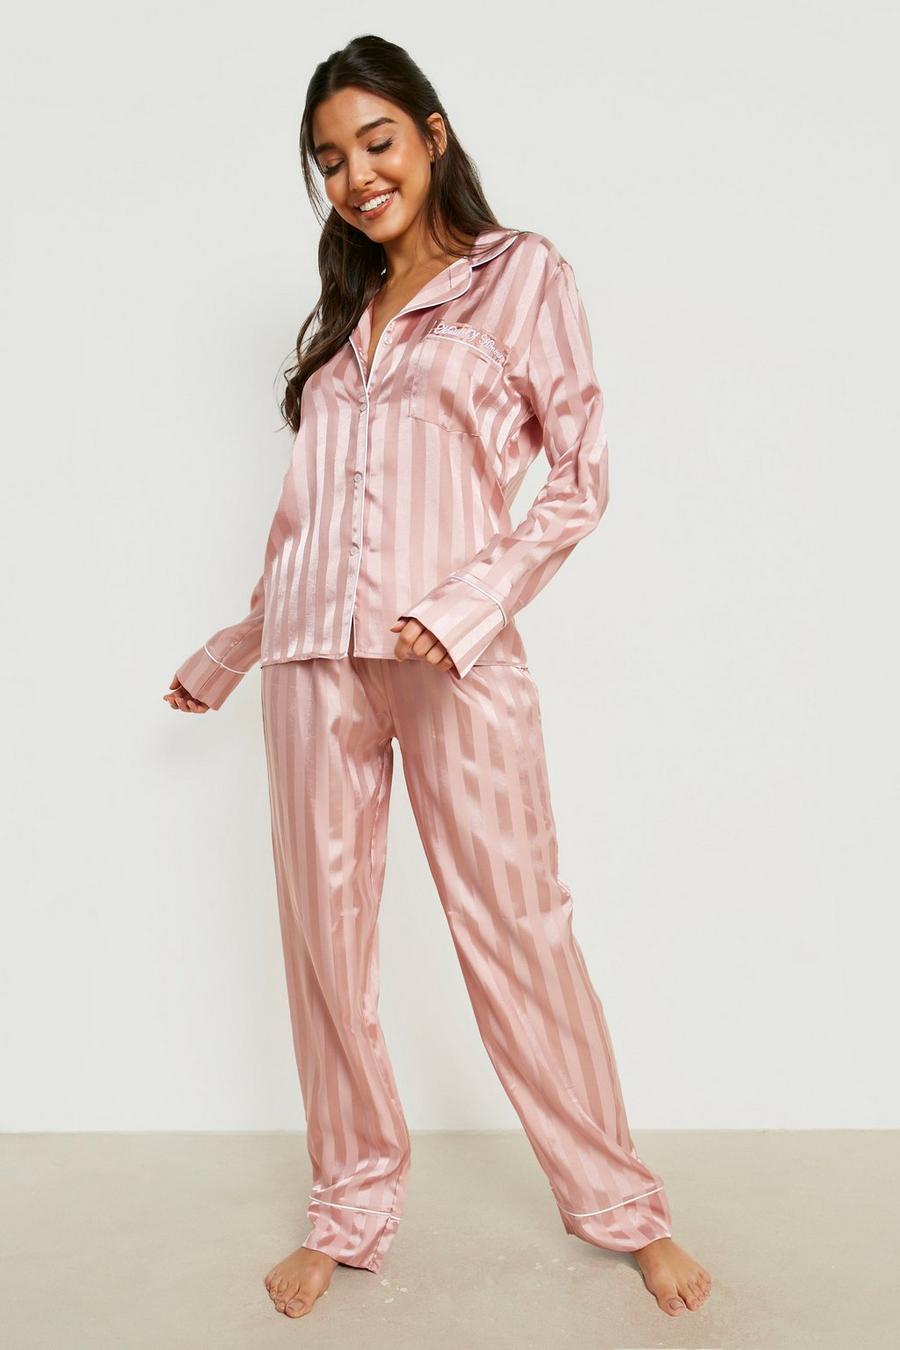 Kleding Meisjeskleding Pyjamas & Badjassen Pyjama Sets Slurps & Burps Dames Pyjama Set 